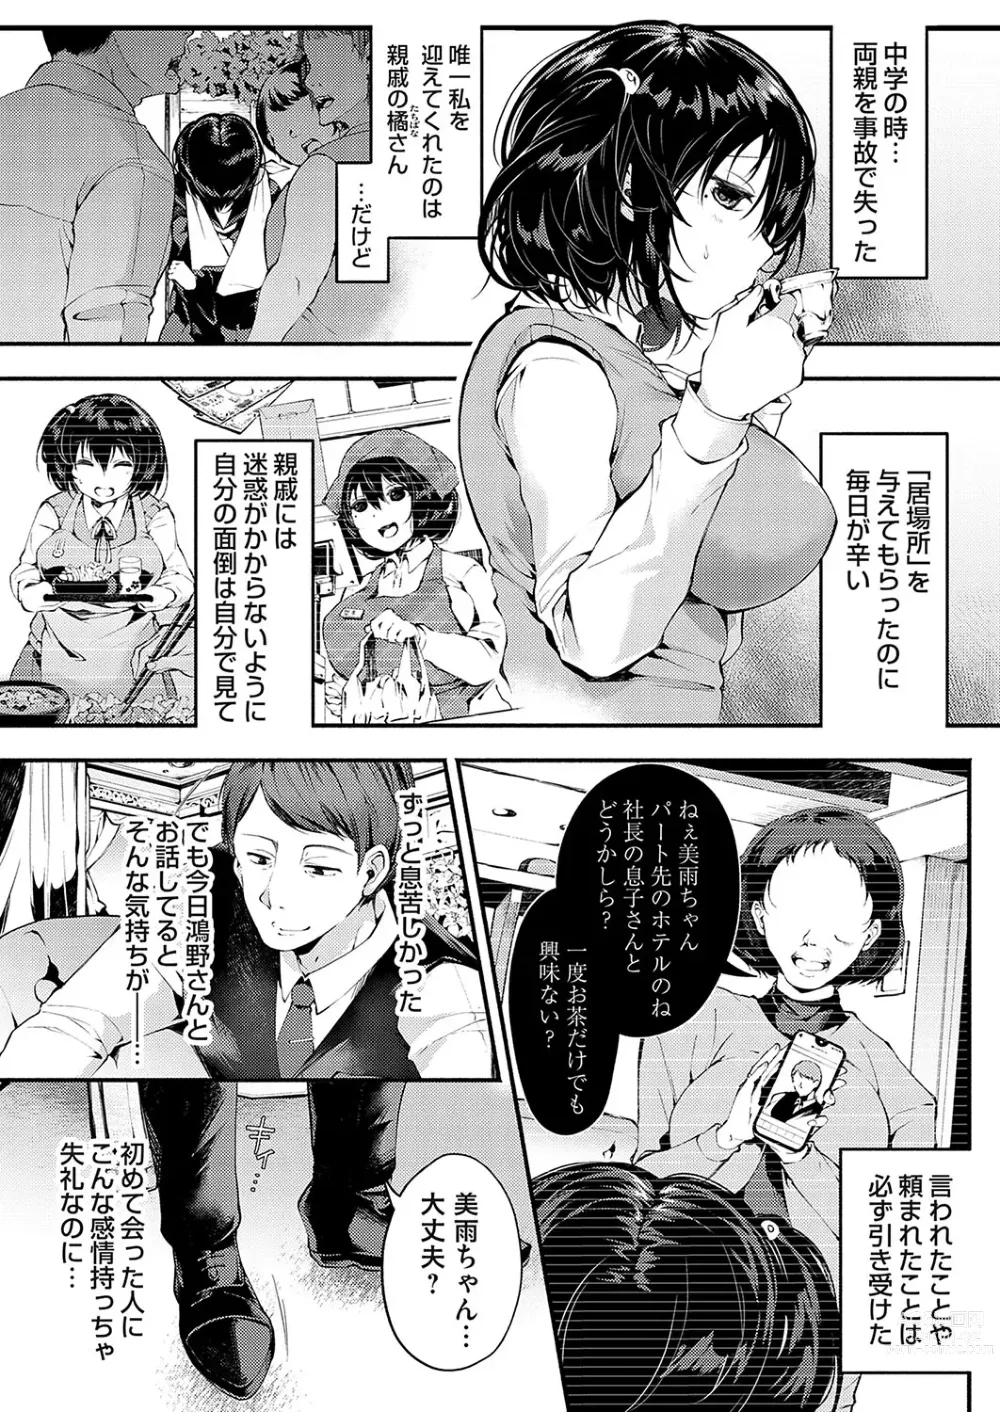 Page 3 of manga COMIC Magnum Vol. 175